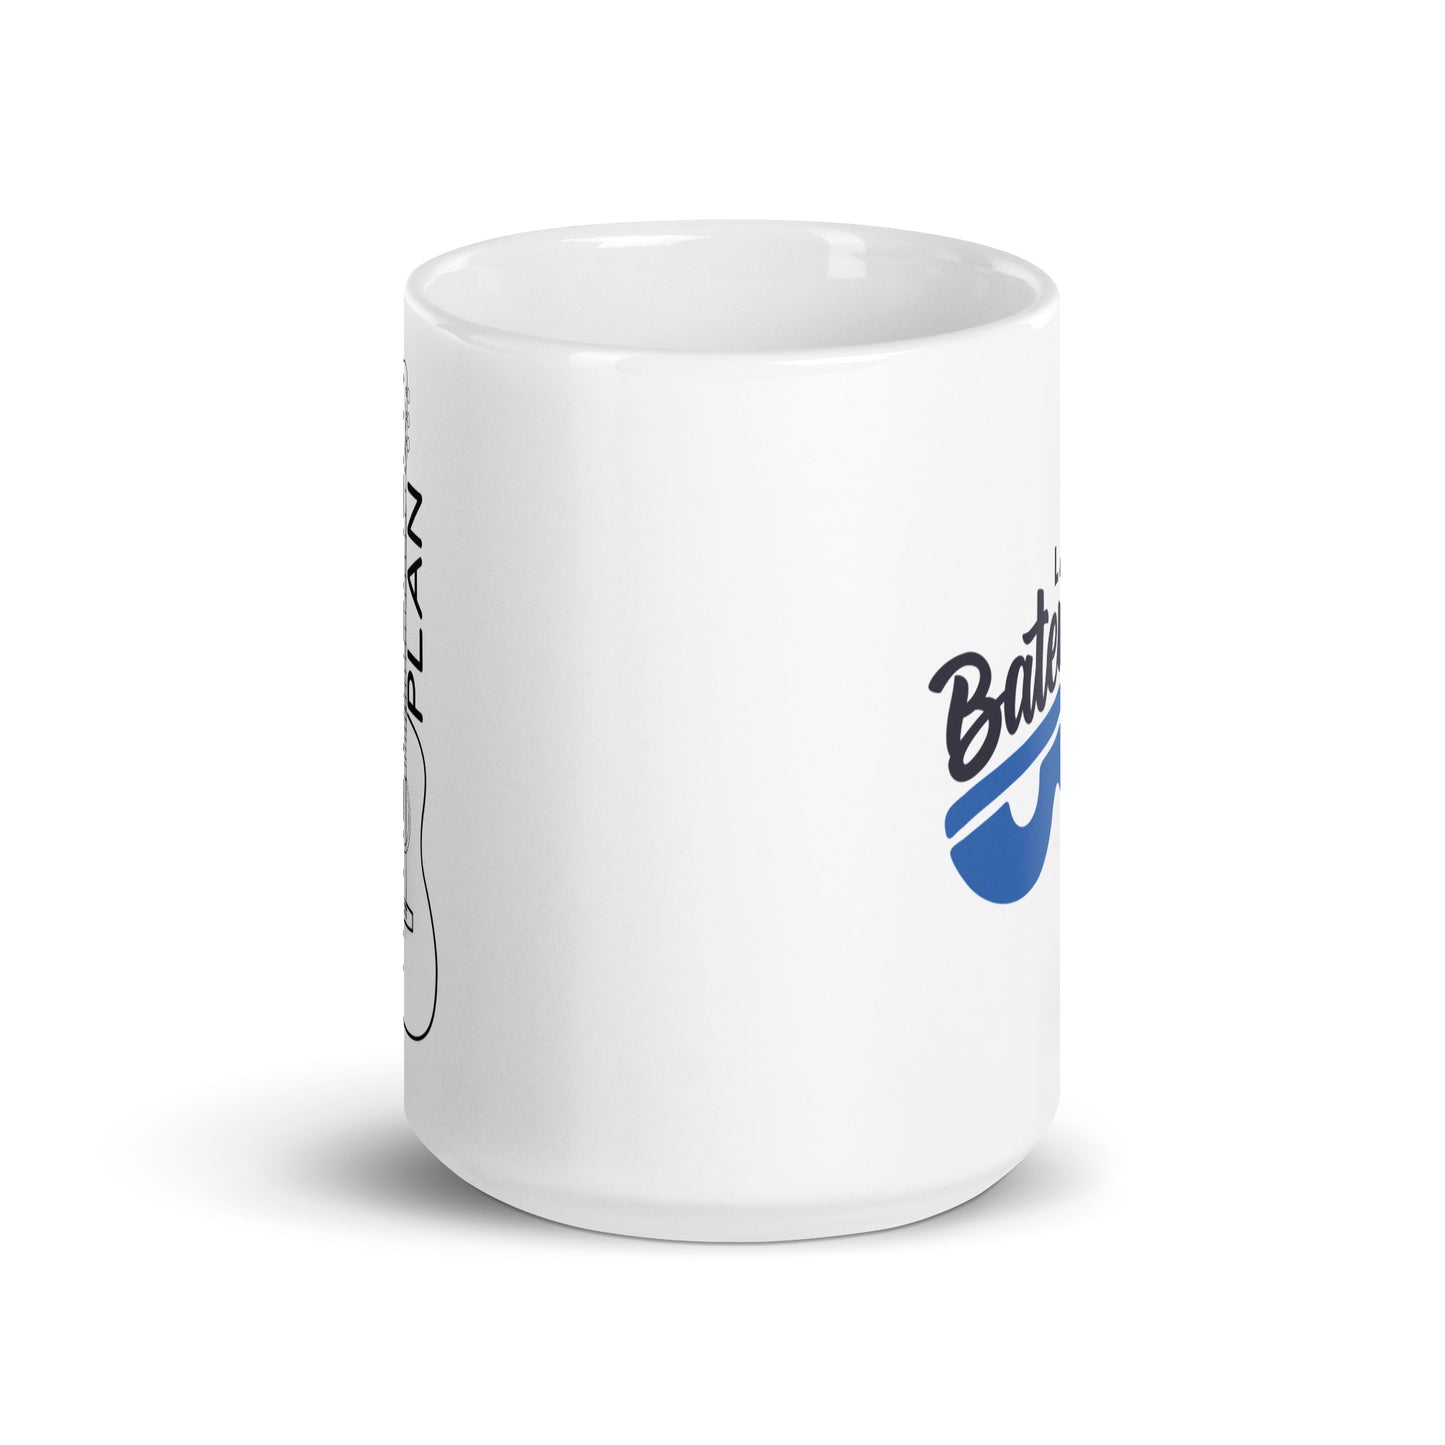 Retirement Plan - White glossy mug